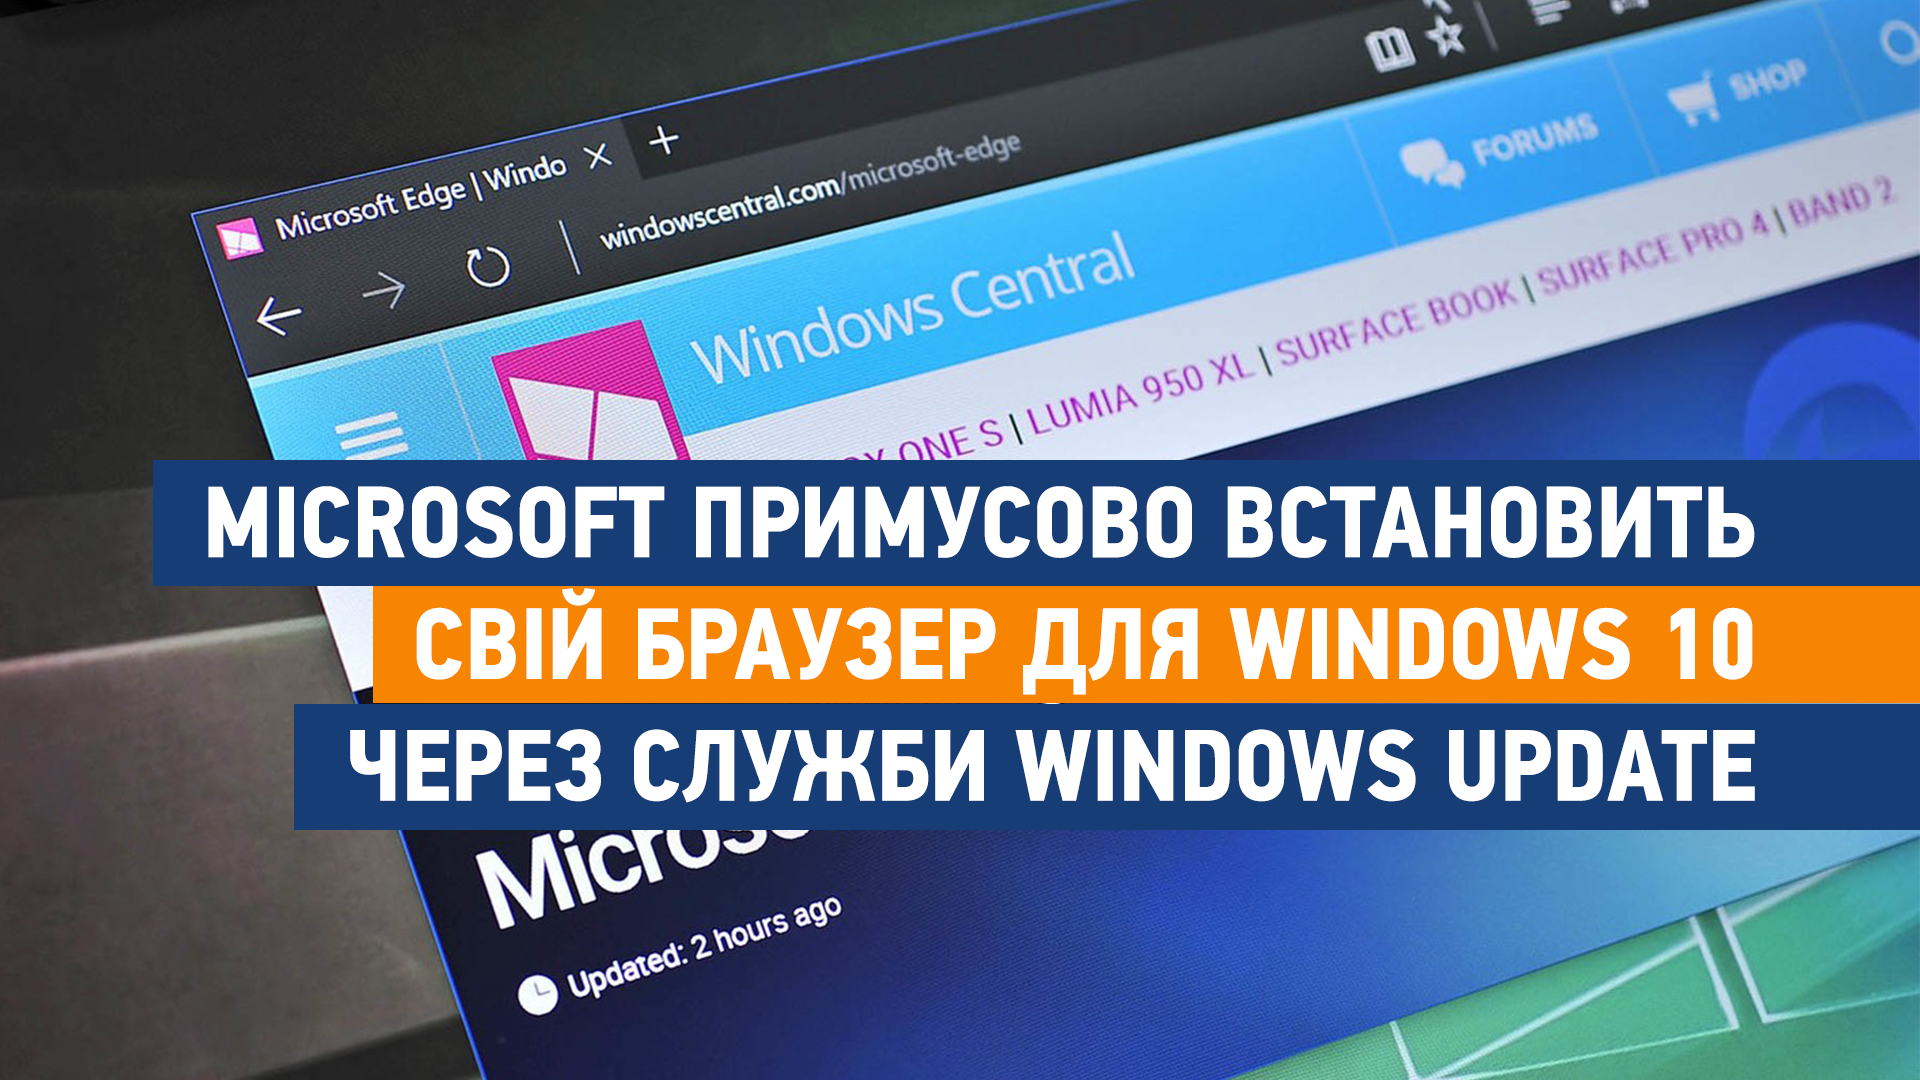 Microsoft примусово встановить свій браузер для Windows 10 через служби Windows Update